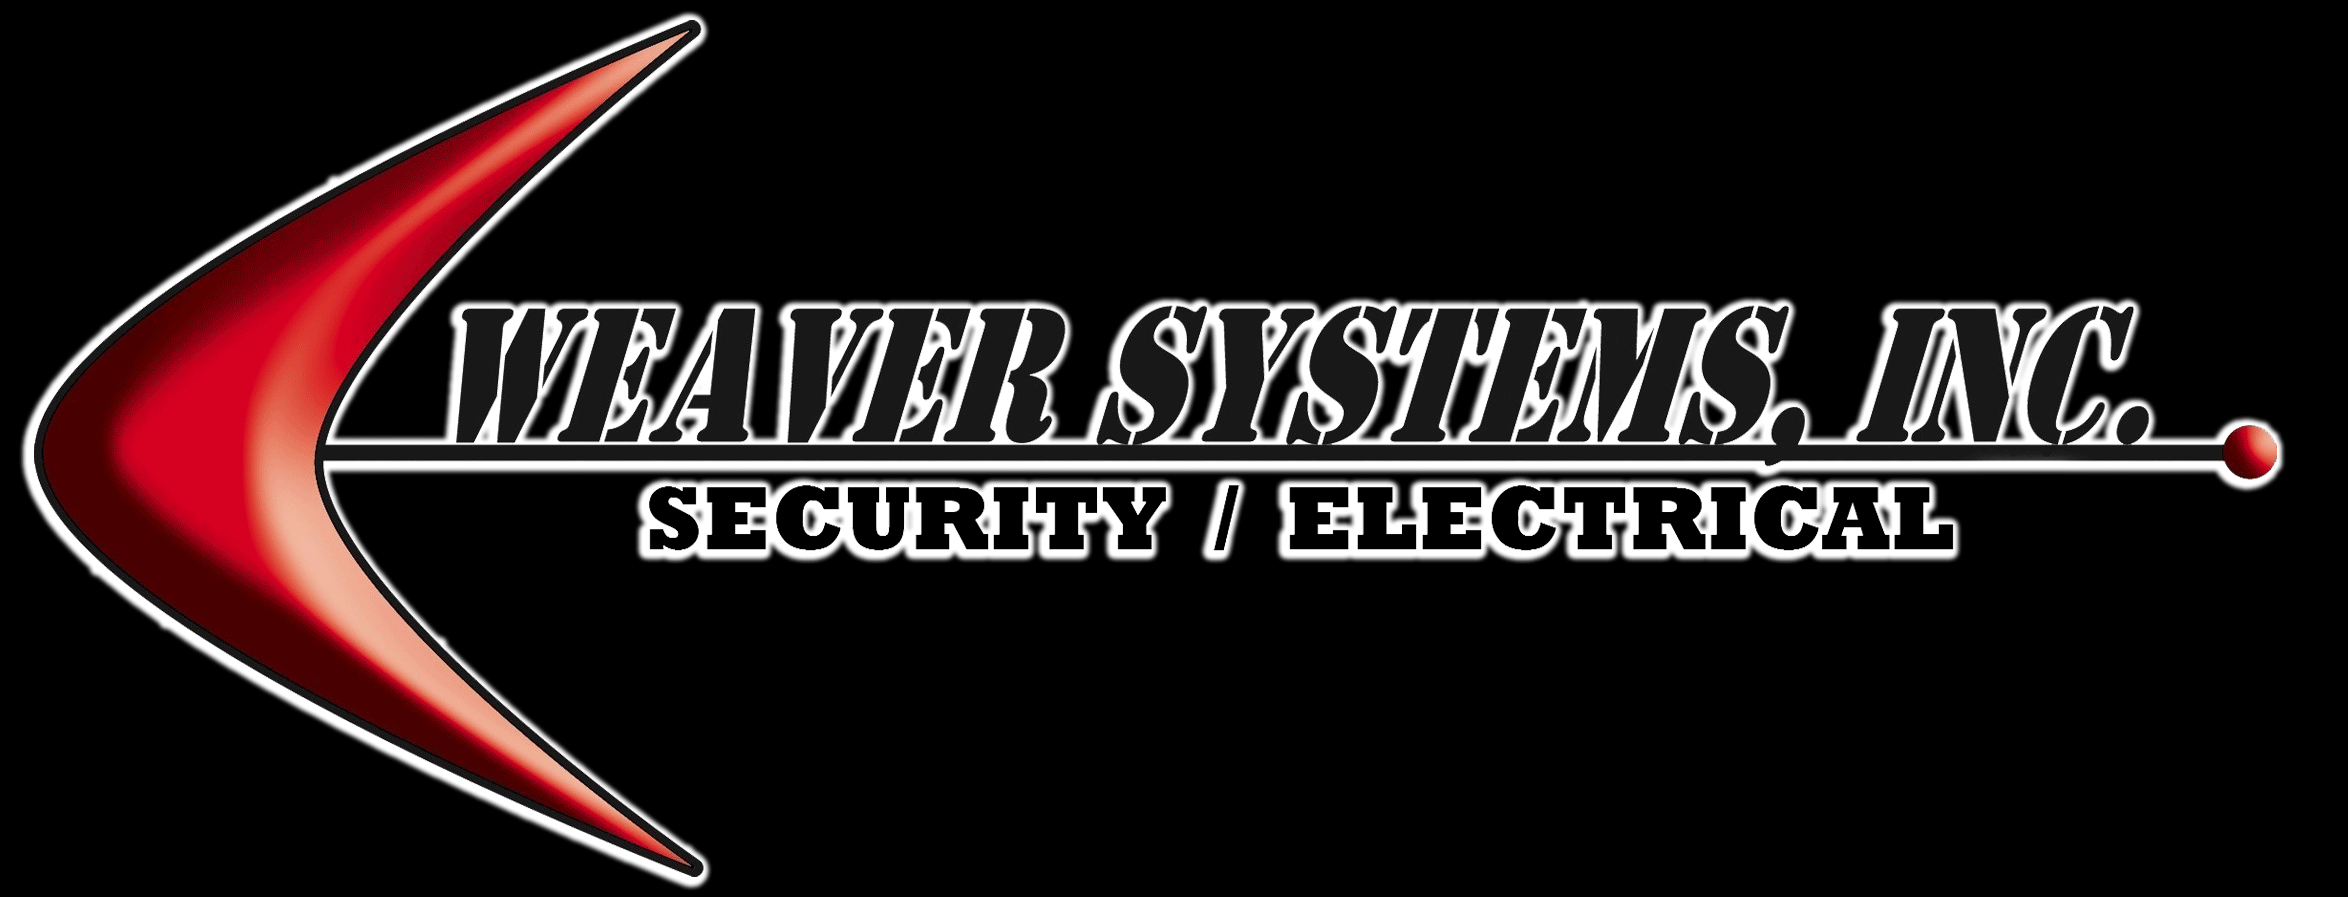 Weaver Systems logo